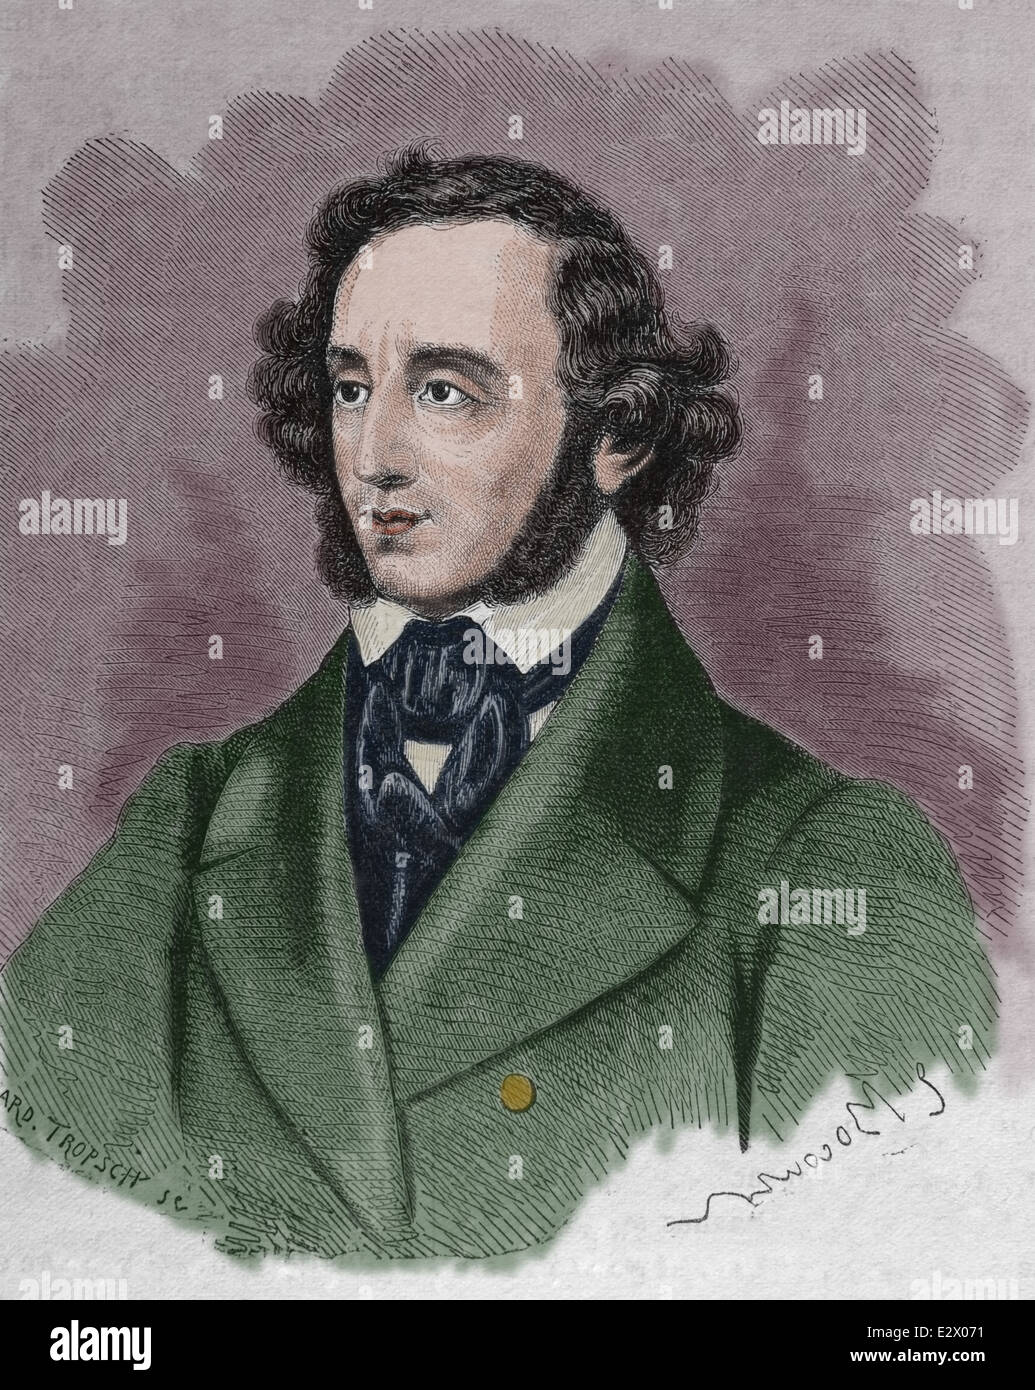 Felix Mendelssohn (1809-1847). German composer, pianist, organist and conductor. Romantic period. Engraving. Color. Stock Photo